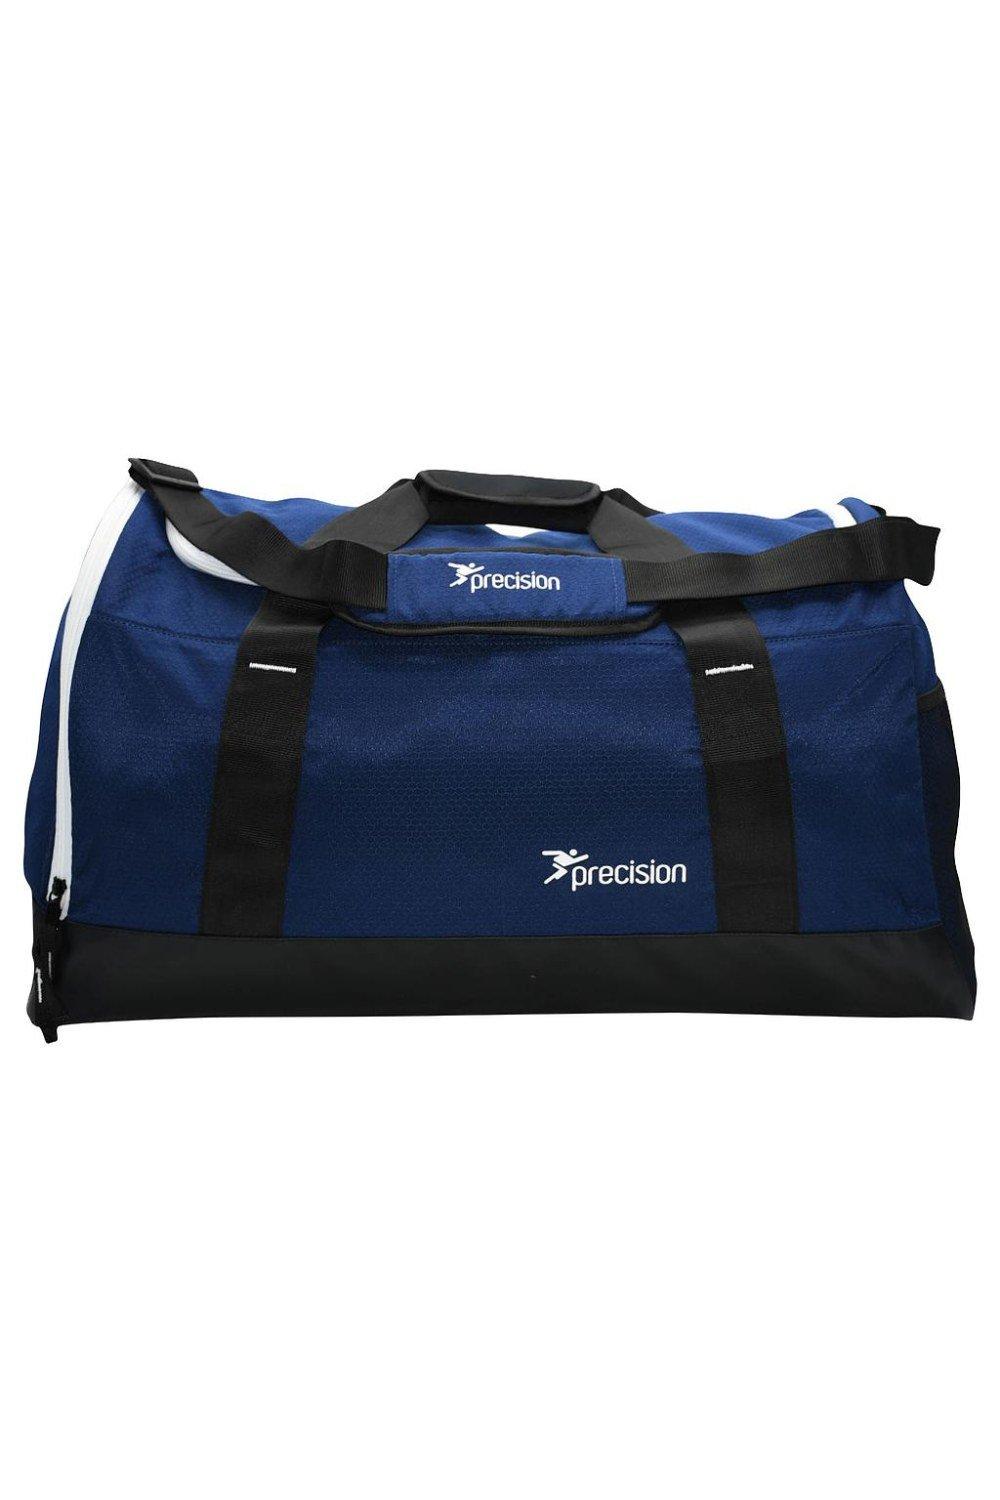 Дорожная сумка Pro Hx Team Precision, темно-синий